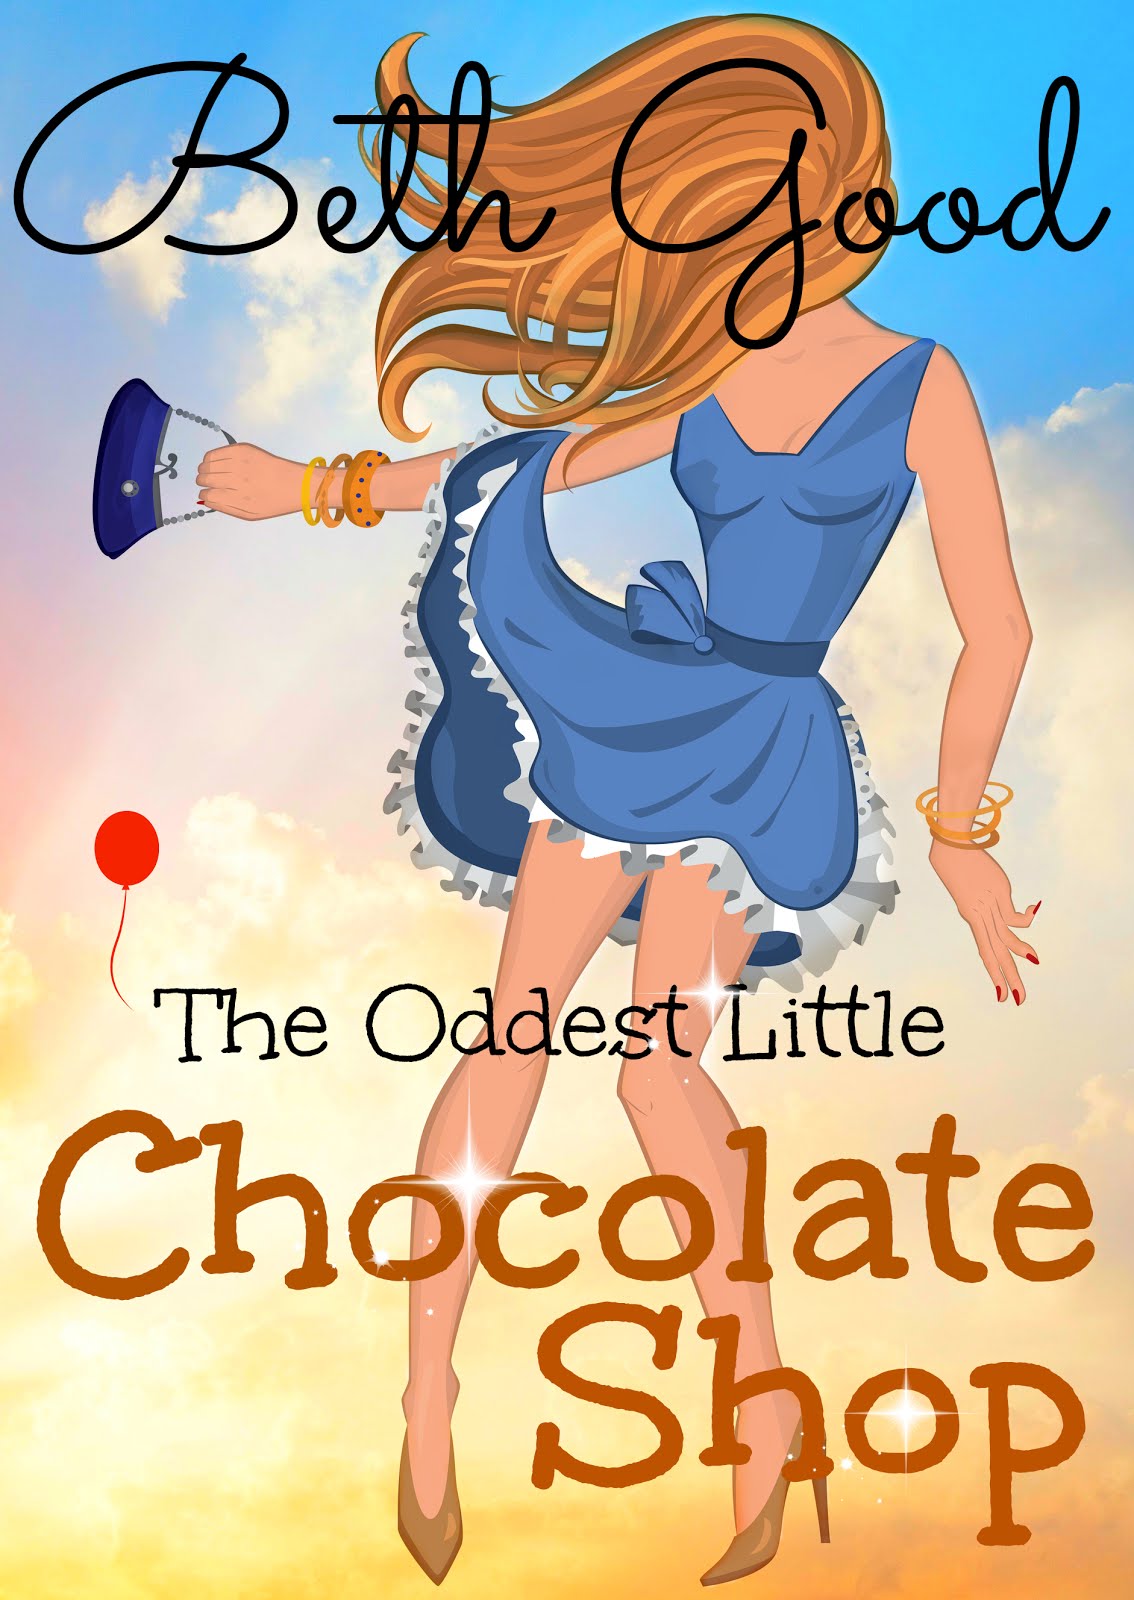 THE ODDEST LITTLE CHOCOLATE SHOP